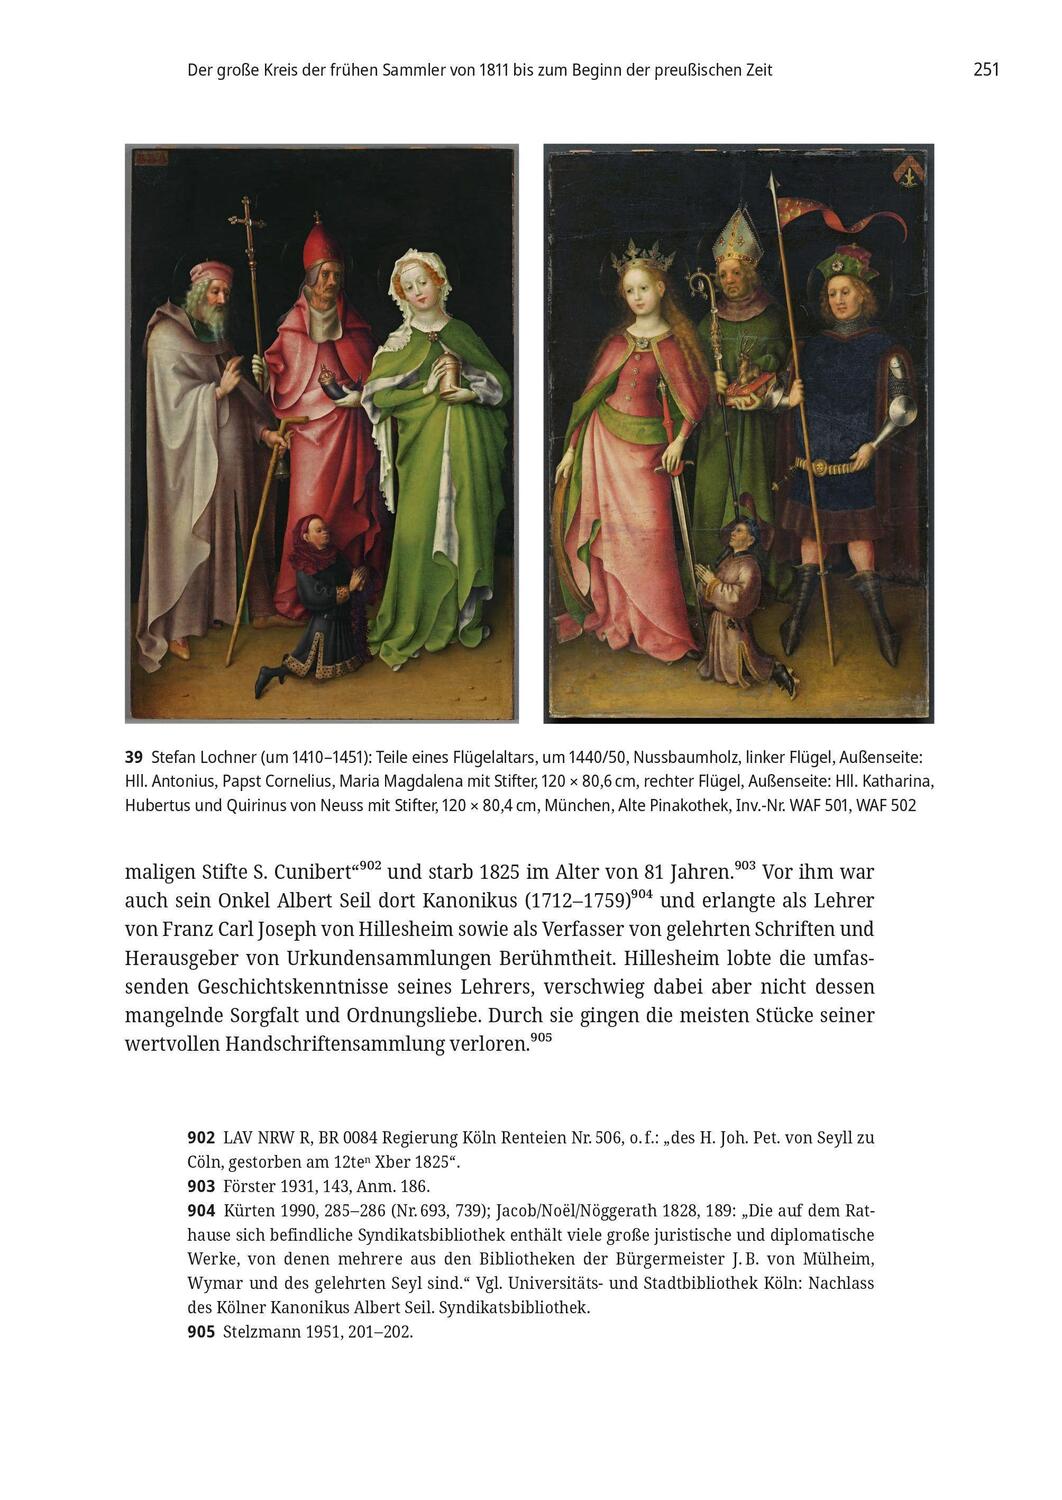 Bild: 9783422801127 | Säkularisation und Kunst in Köln | Andrea Deichmann | Buch | 367 S.